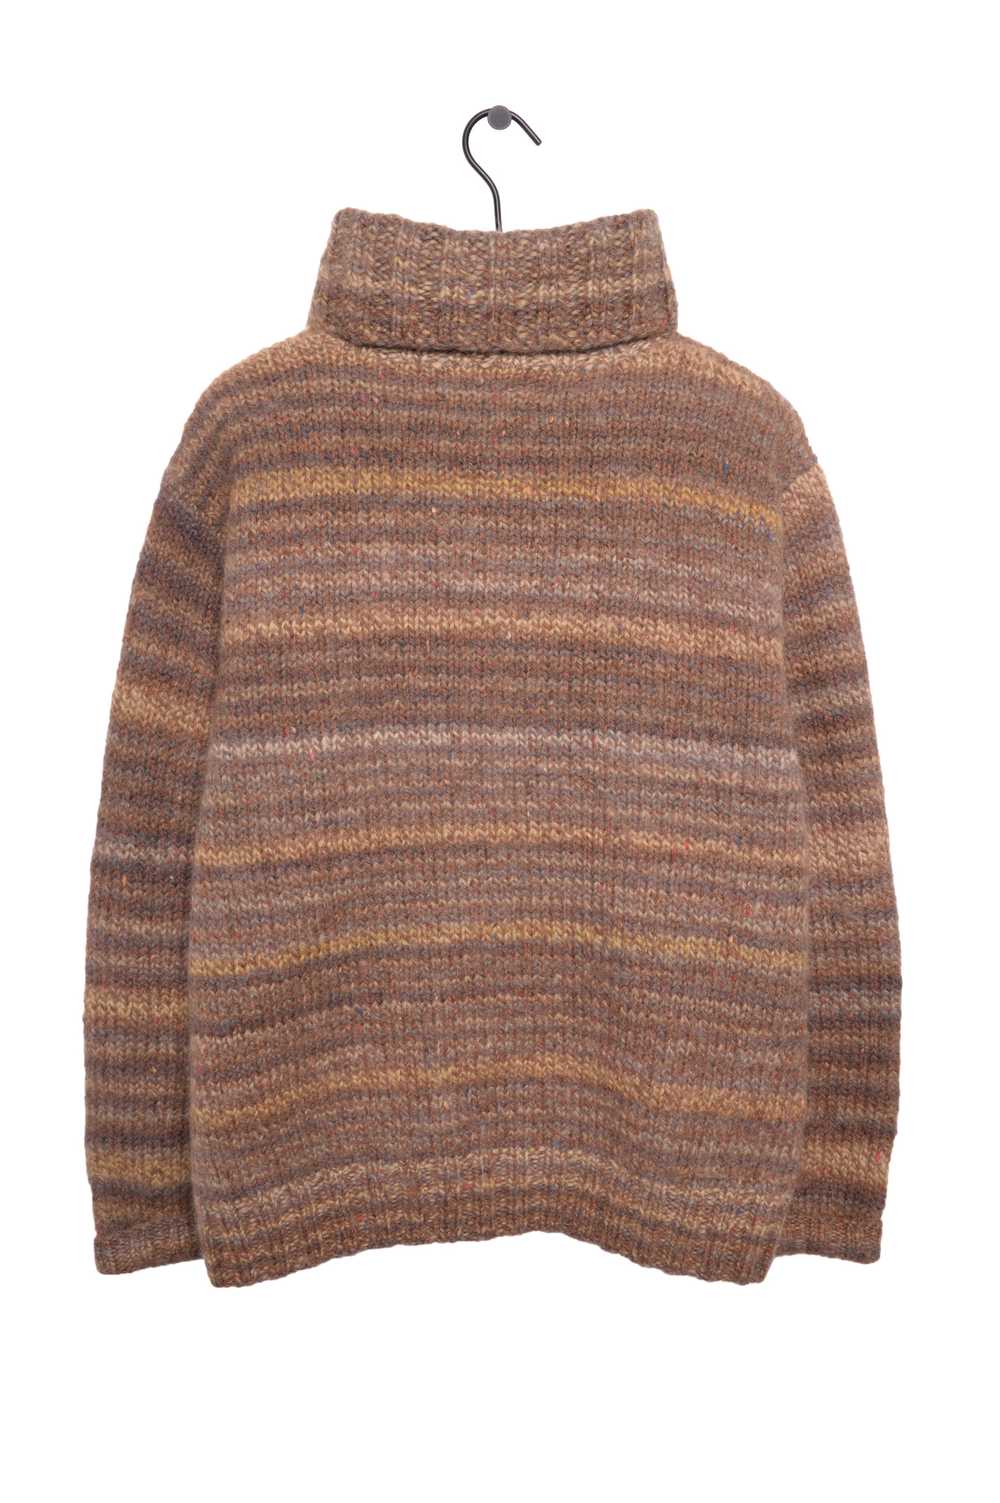 Brown Turtleneck Sweater - image 3